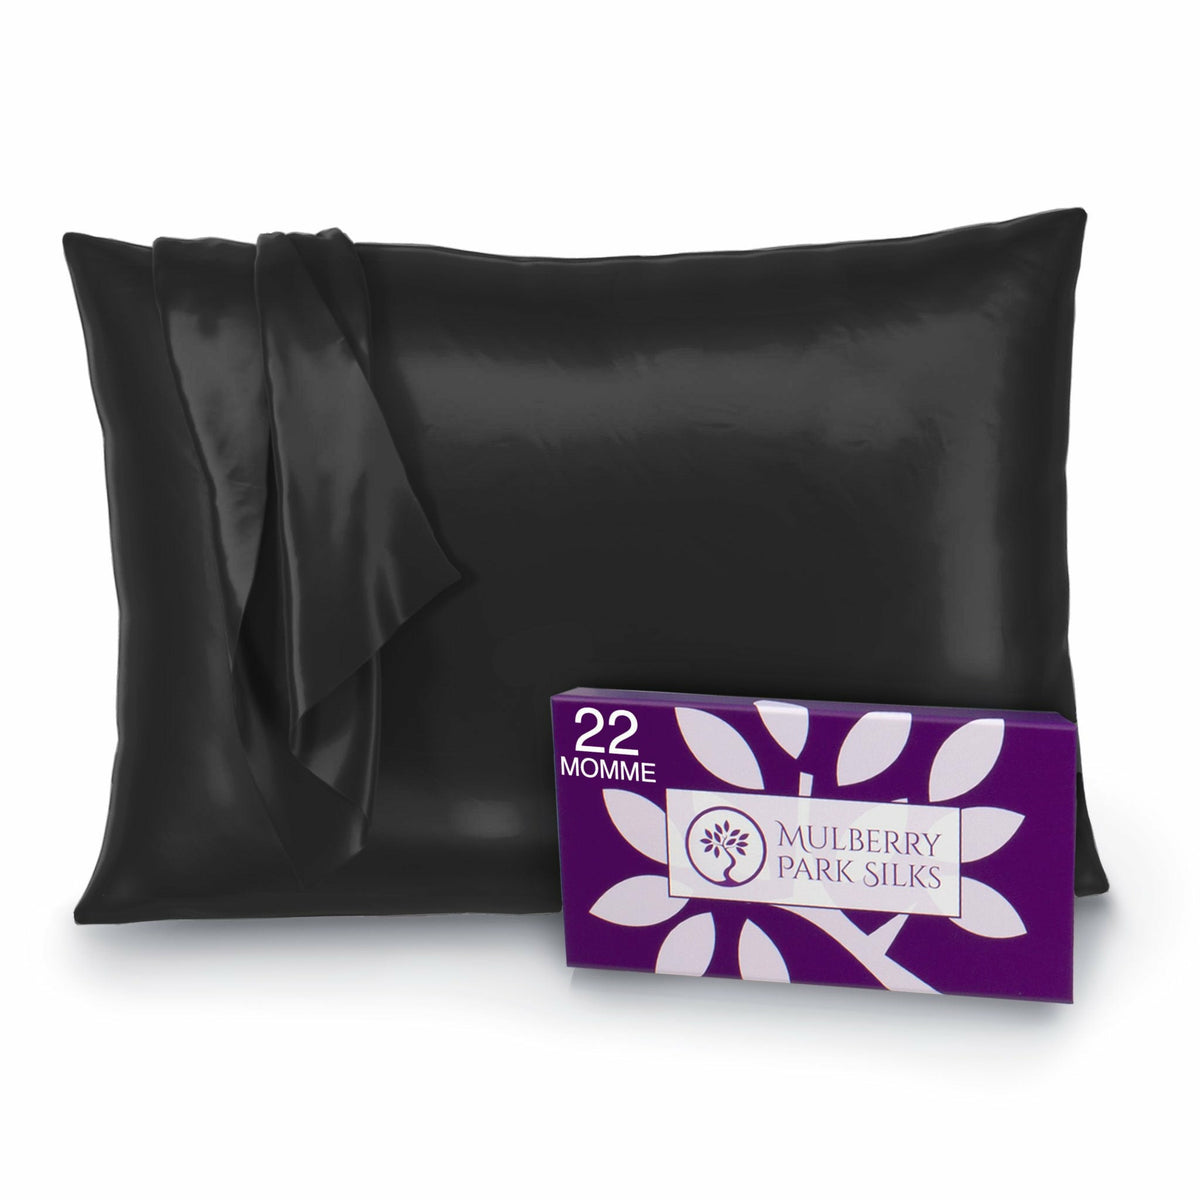 Mulberry Park Silks Deluxe 22 Momme Pure Silk Pillowcase Main Black Fine Linens